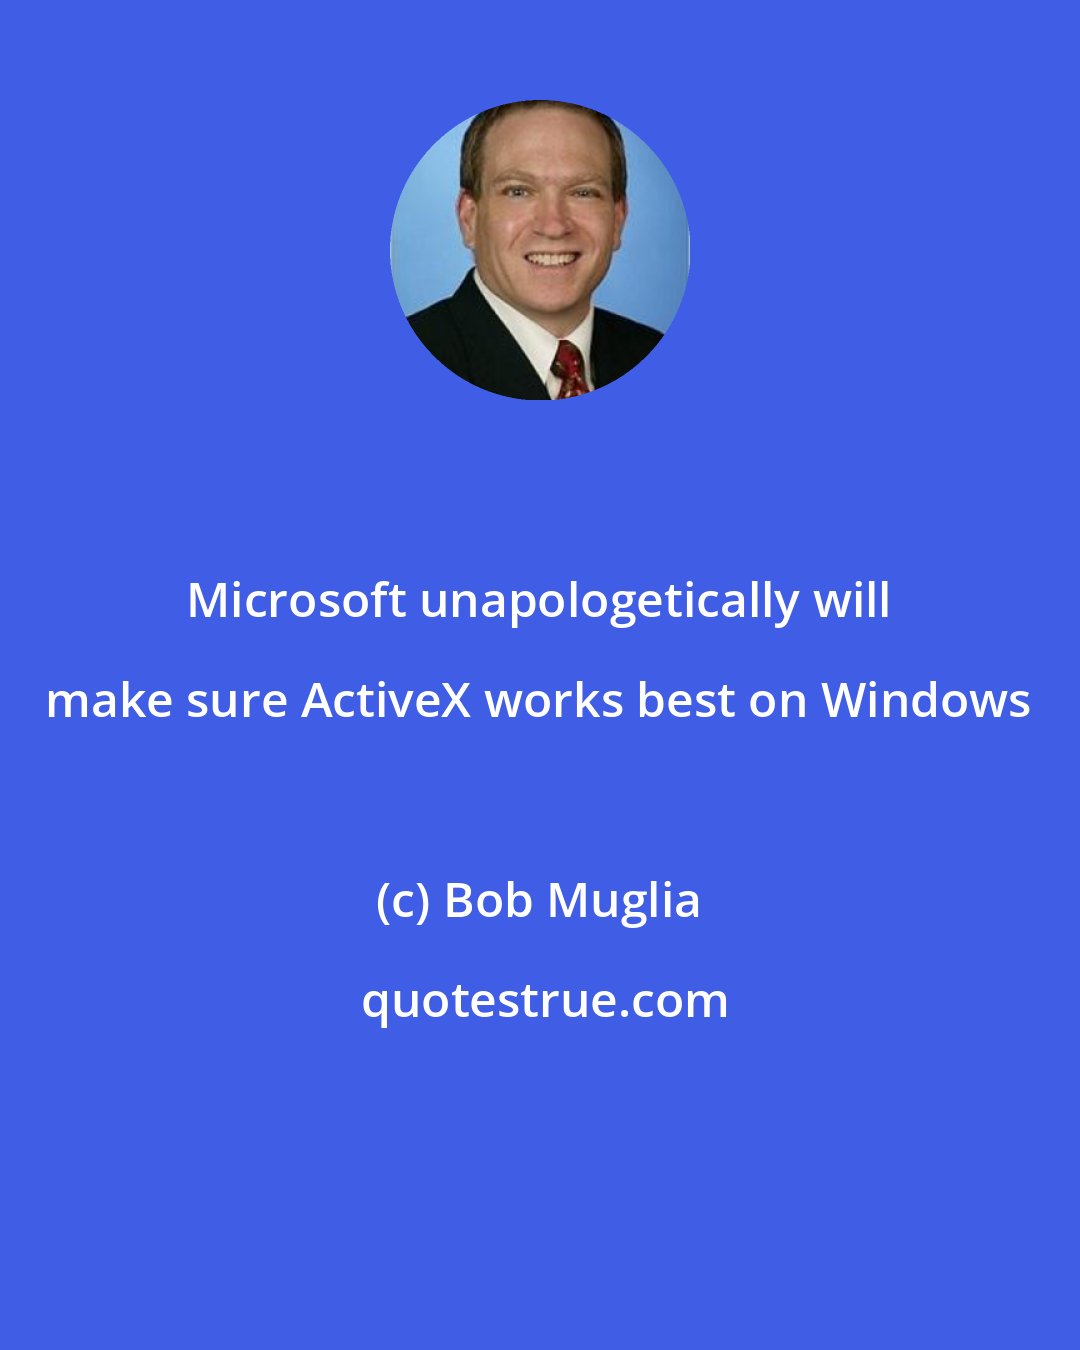 Bob Muglia: Microsoft unapologetically will make sure ActiveX works best on Windows